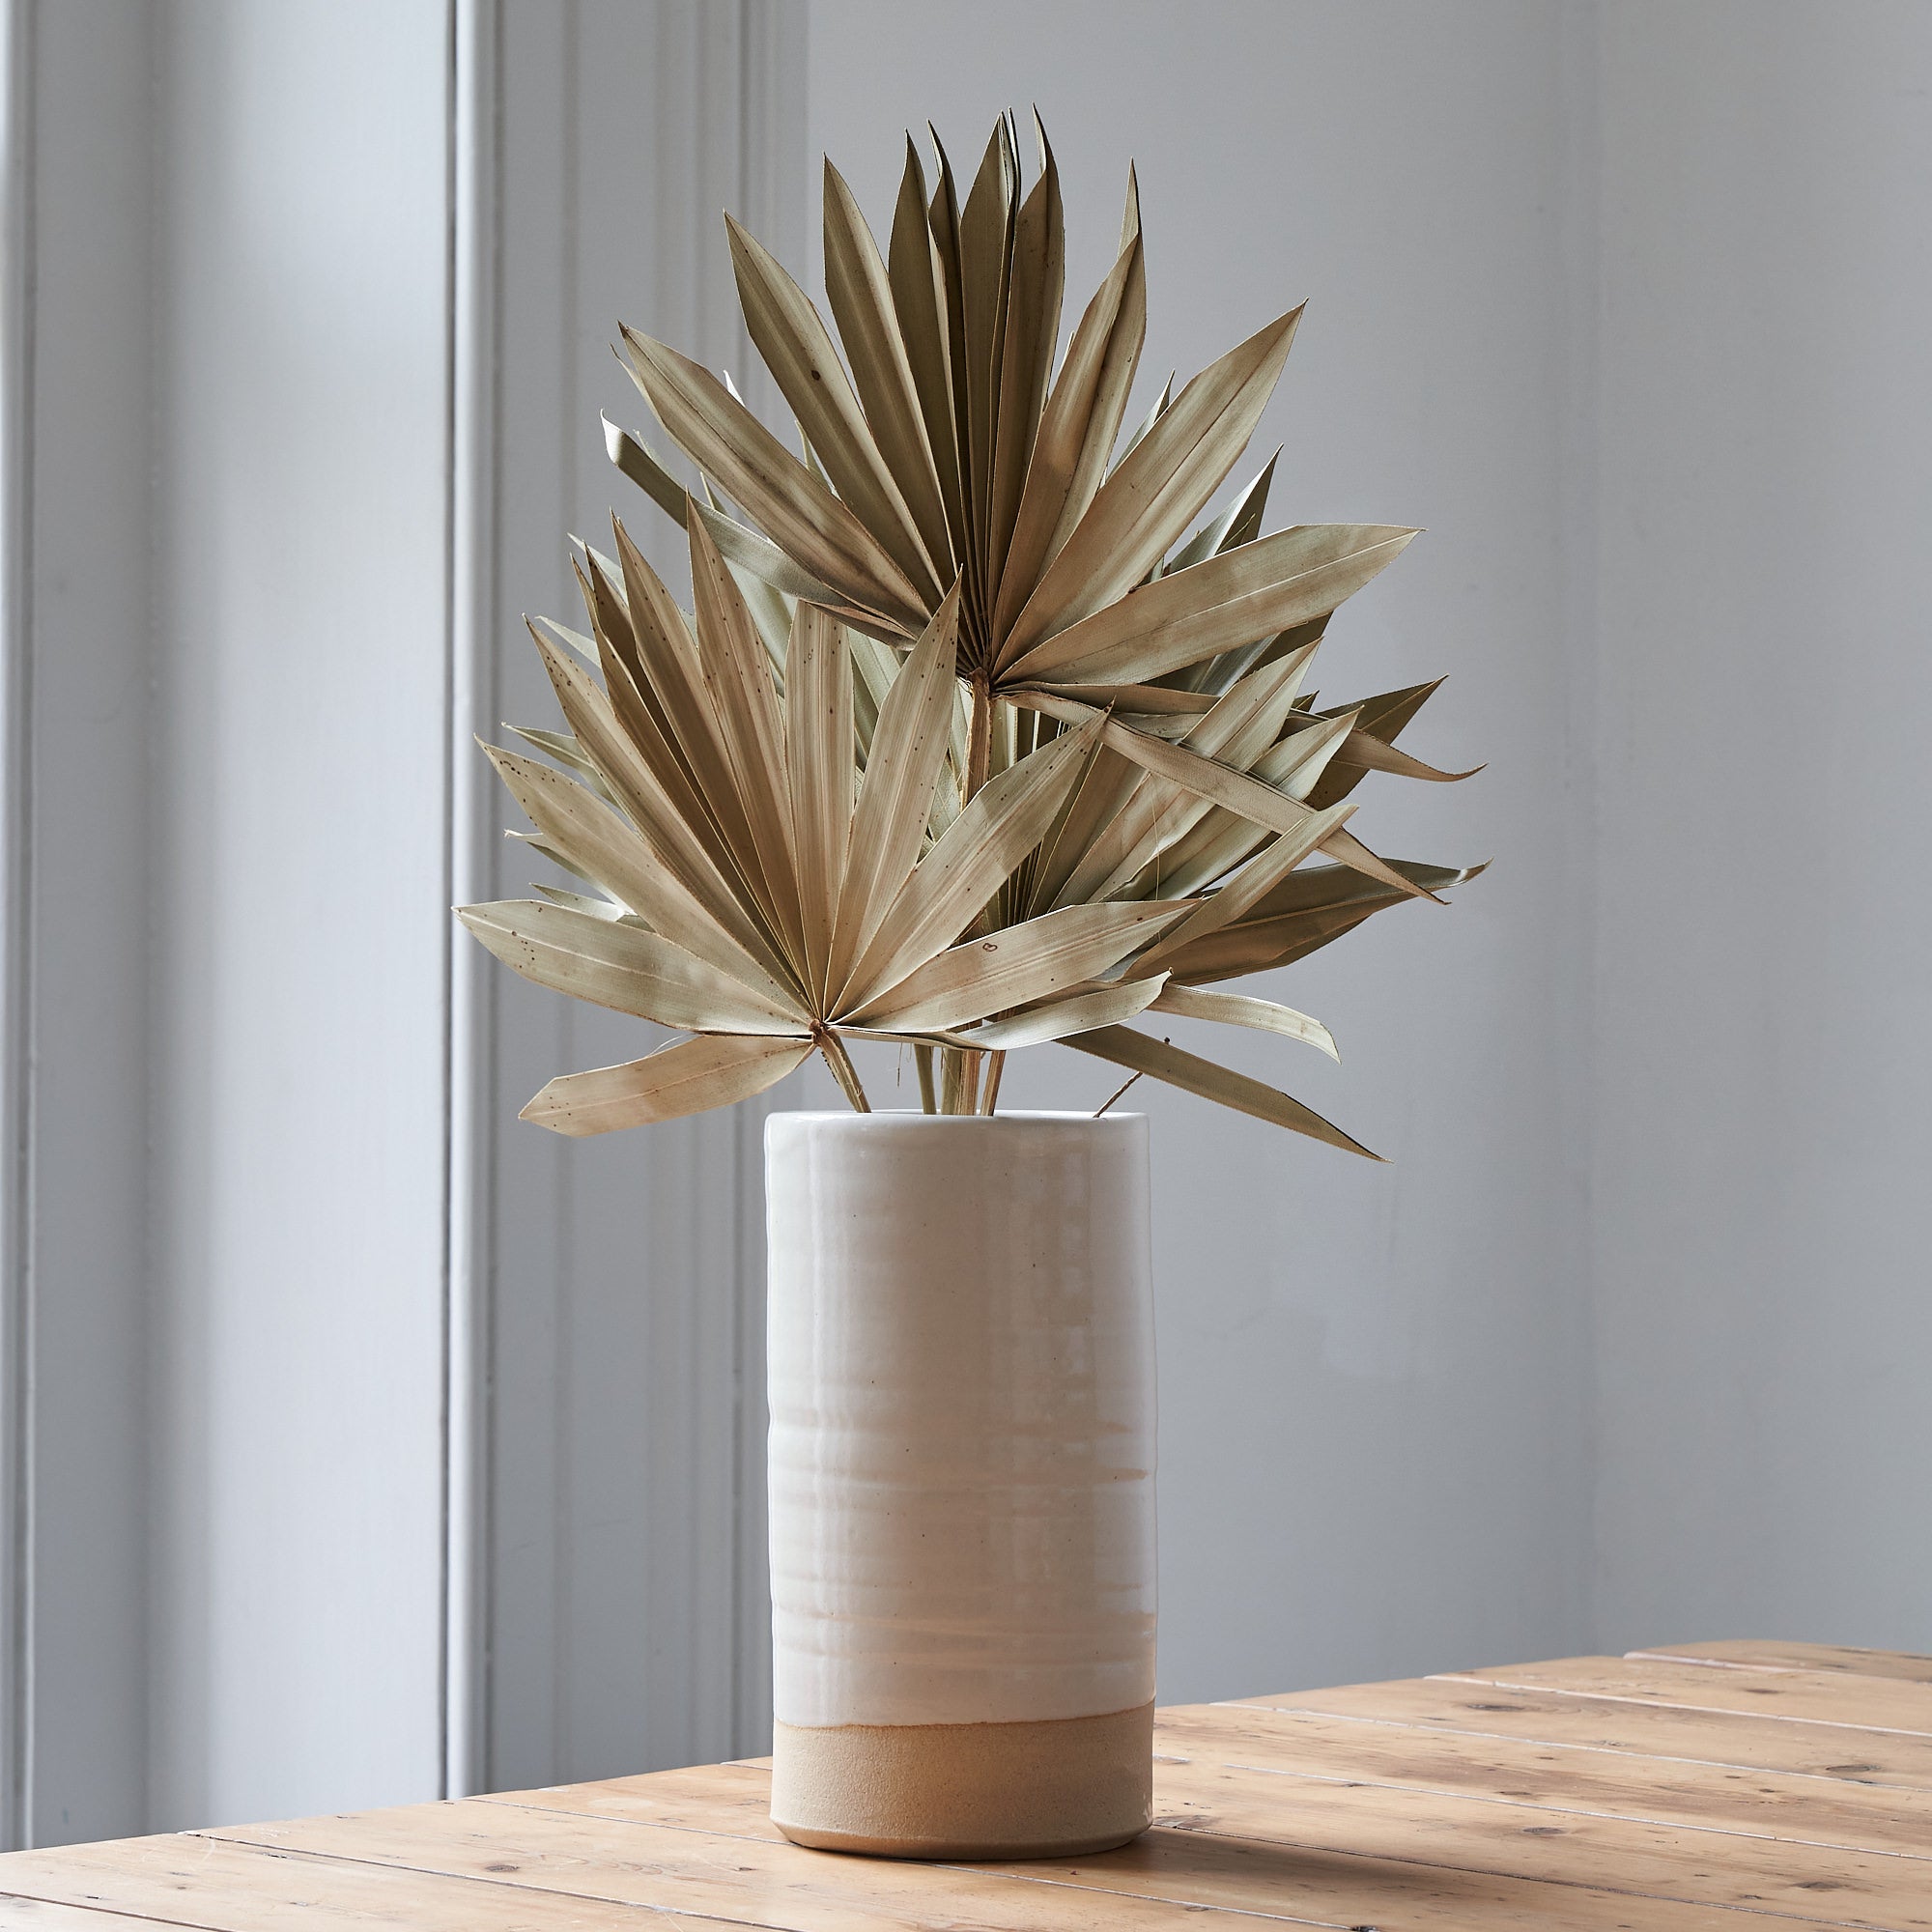 dried palm leaves in ceramic vase